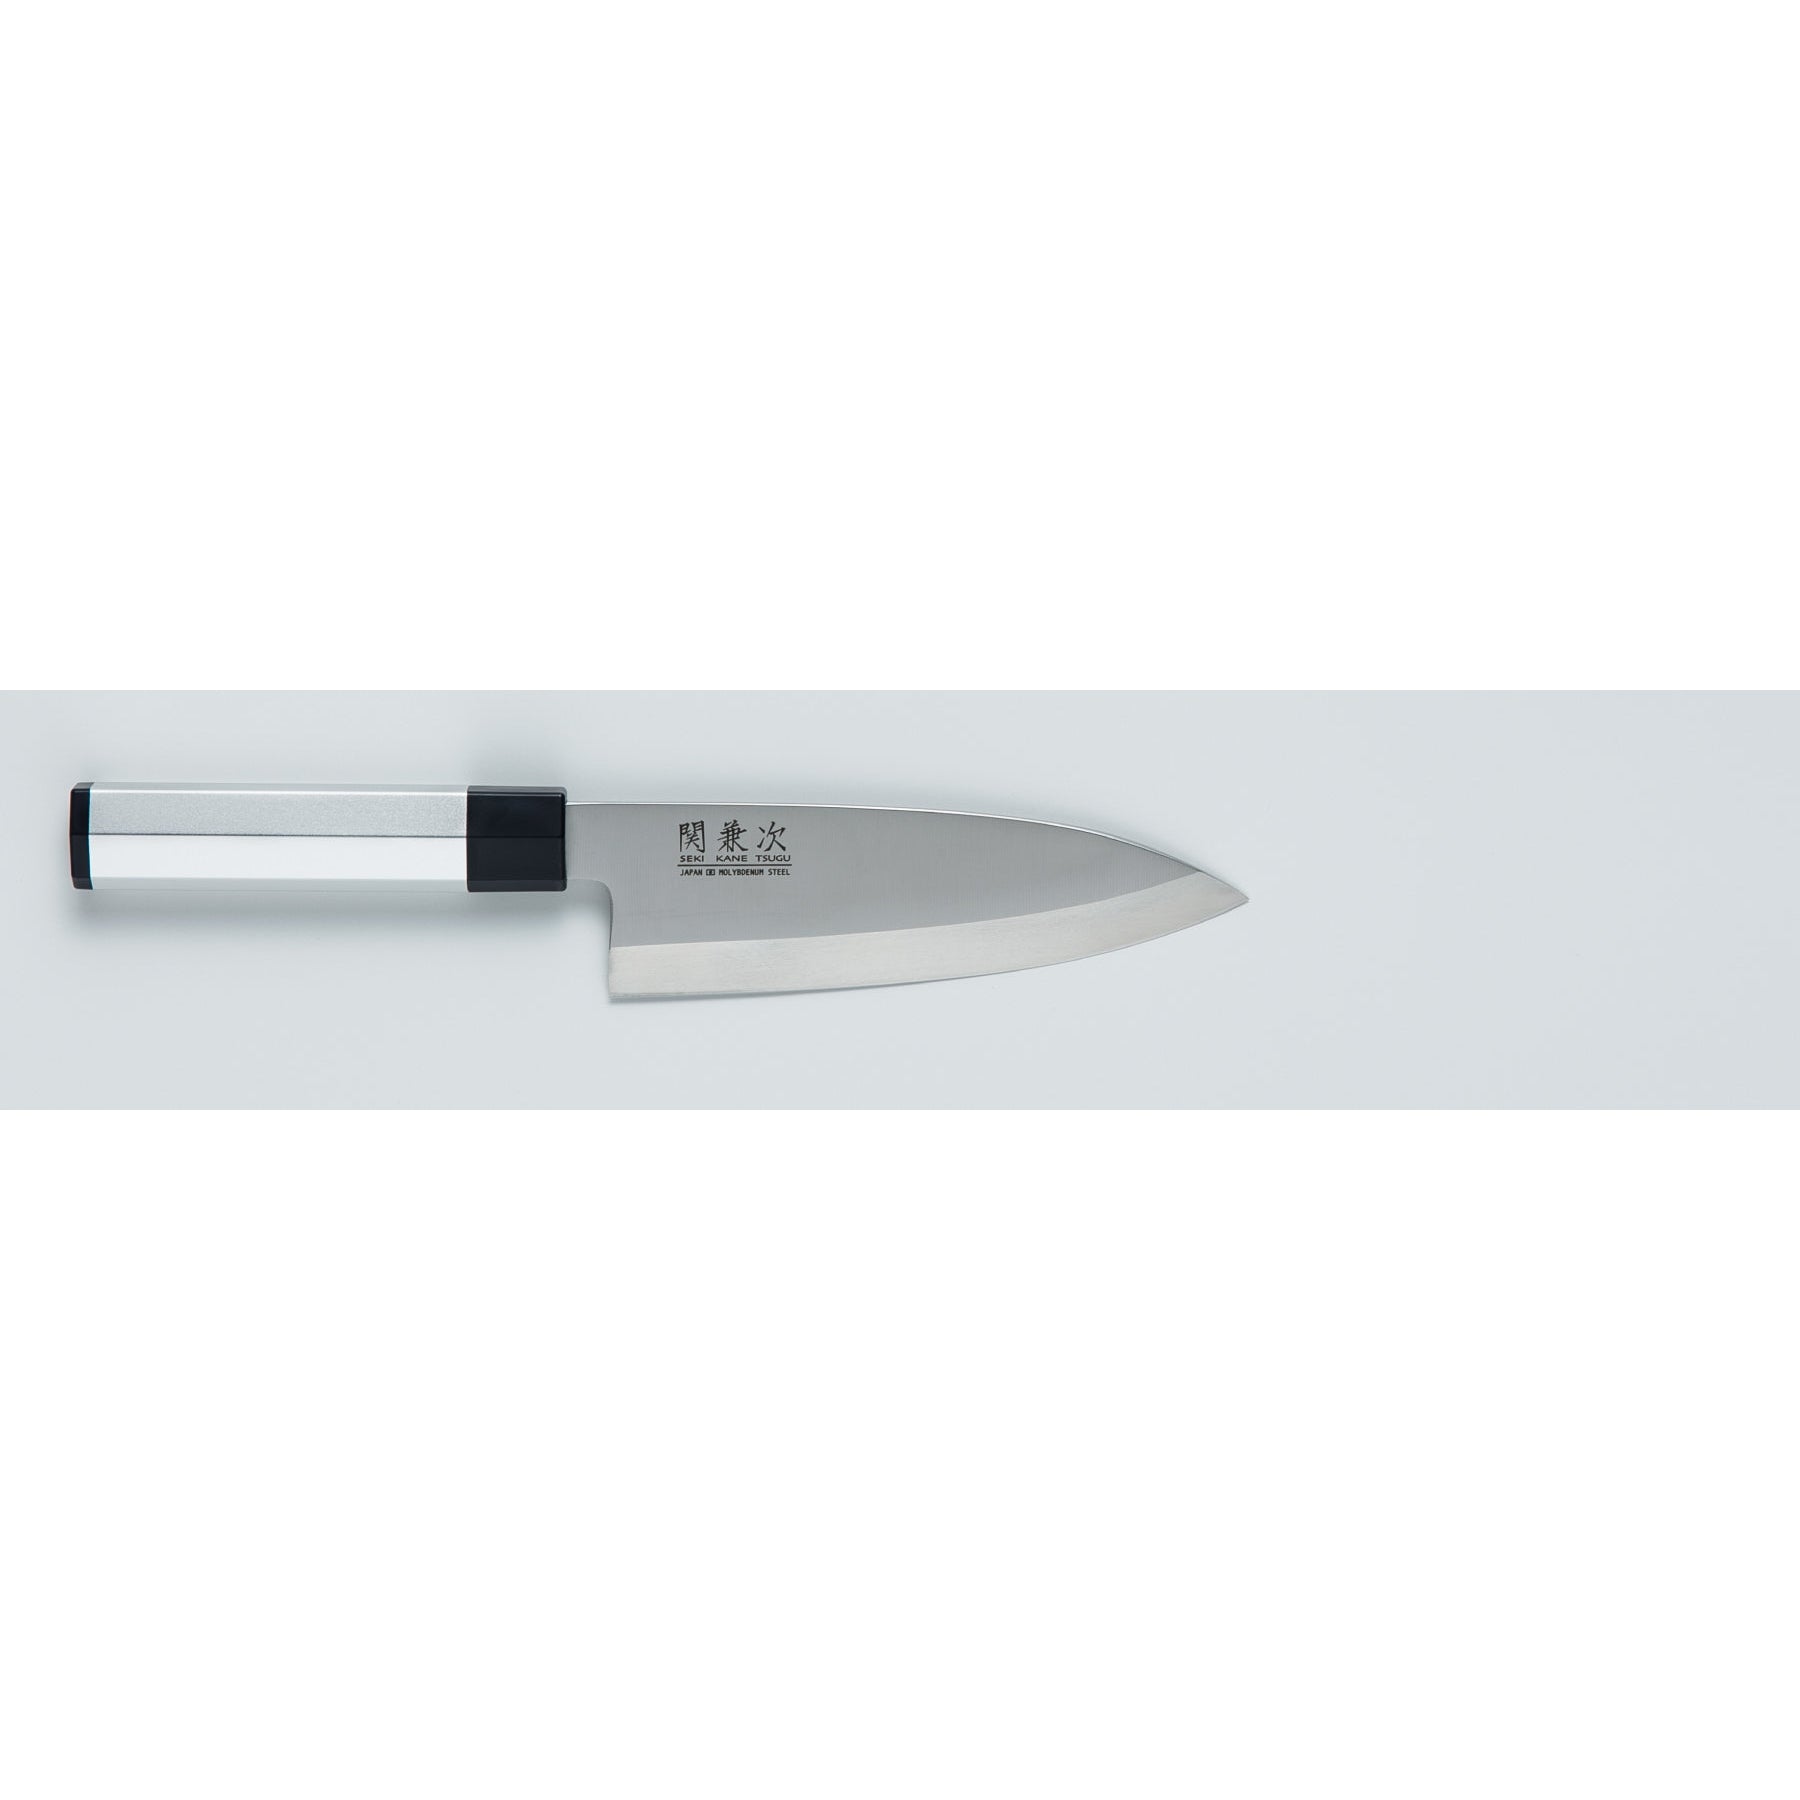 https://cdn.shopify.com/s/files/1/1969/5775/products/Sekikanetsugu-Single-Edged-Japanese-Deba-Knife-with-Aluminum-Handle-165mm-Japanese-Taste-2.jpg?v=1677552691